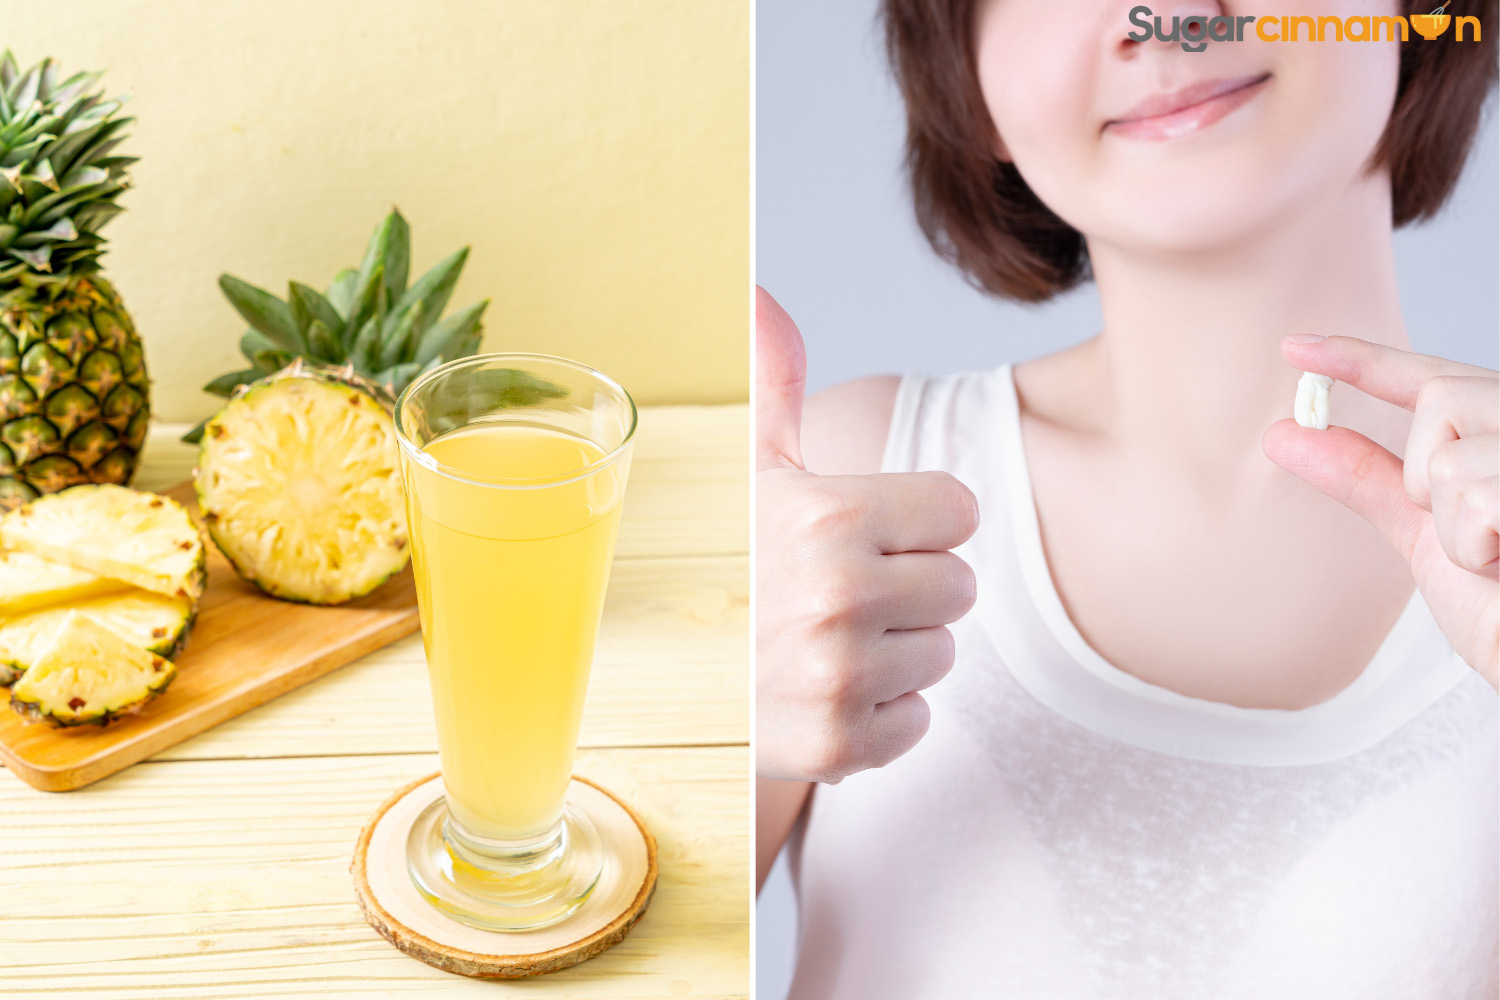 Does Pineapple Juice Help With Wisdom Teeth?